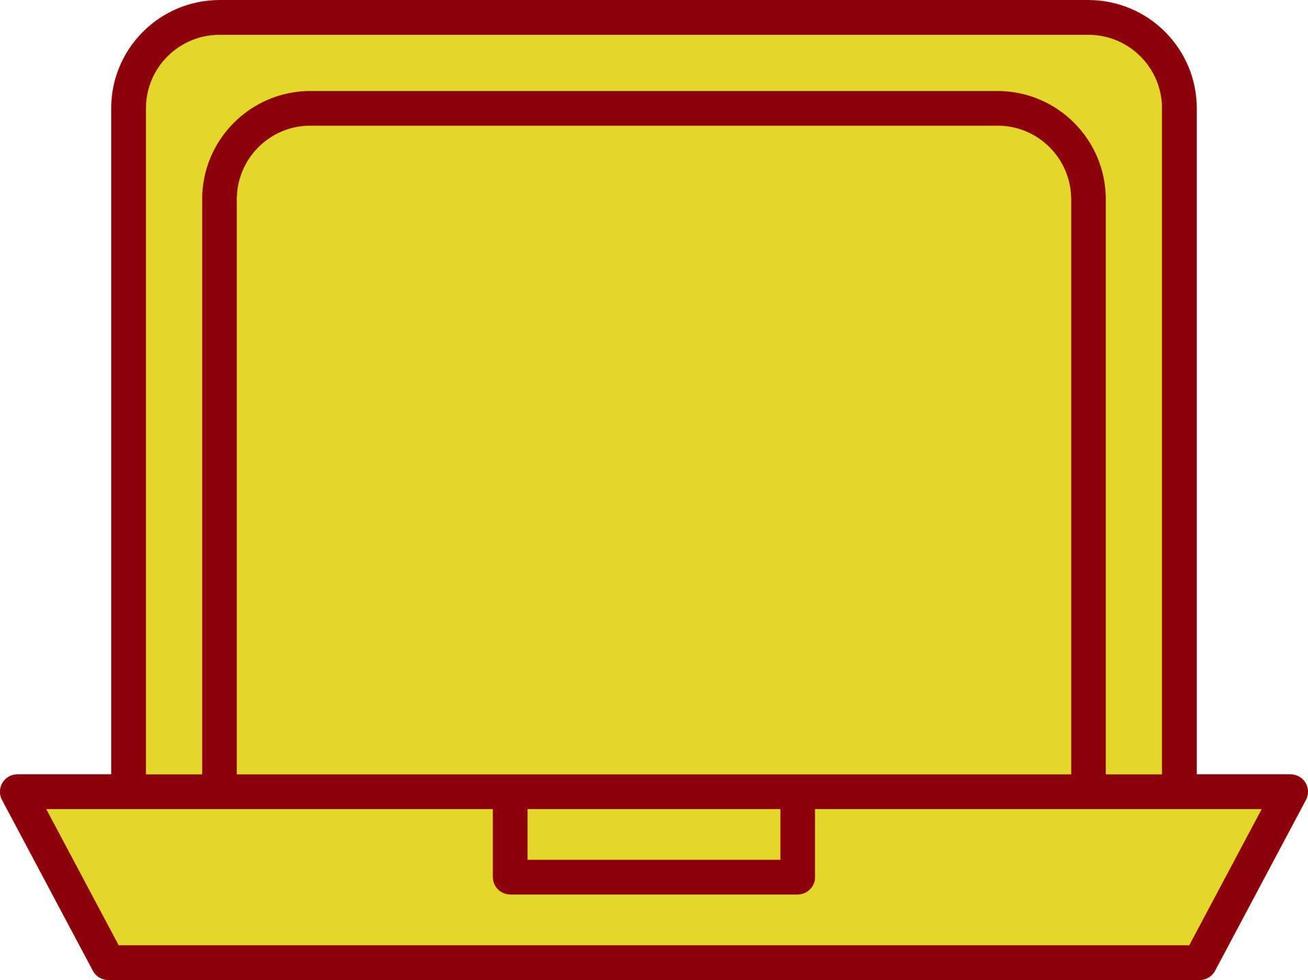 design de ícone de vetor de laptop